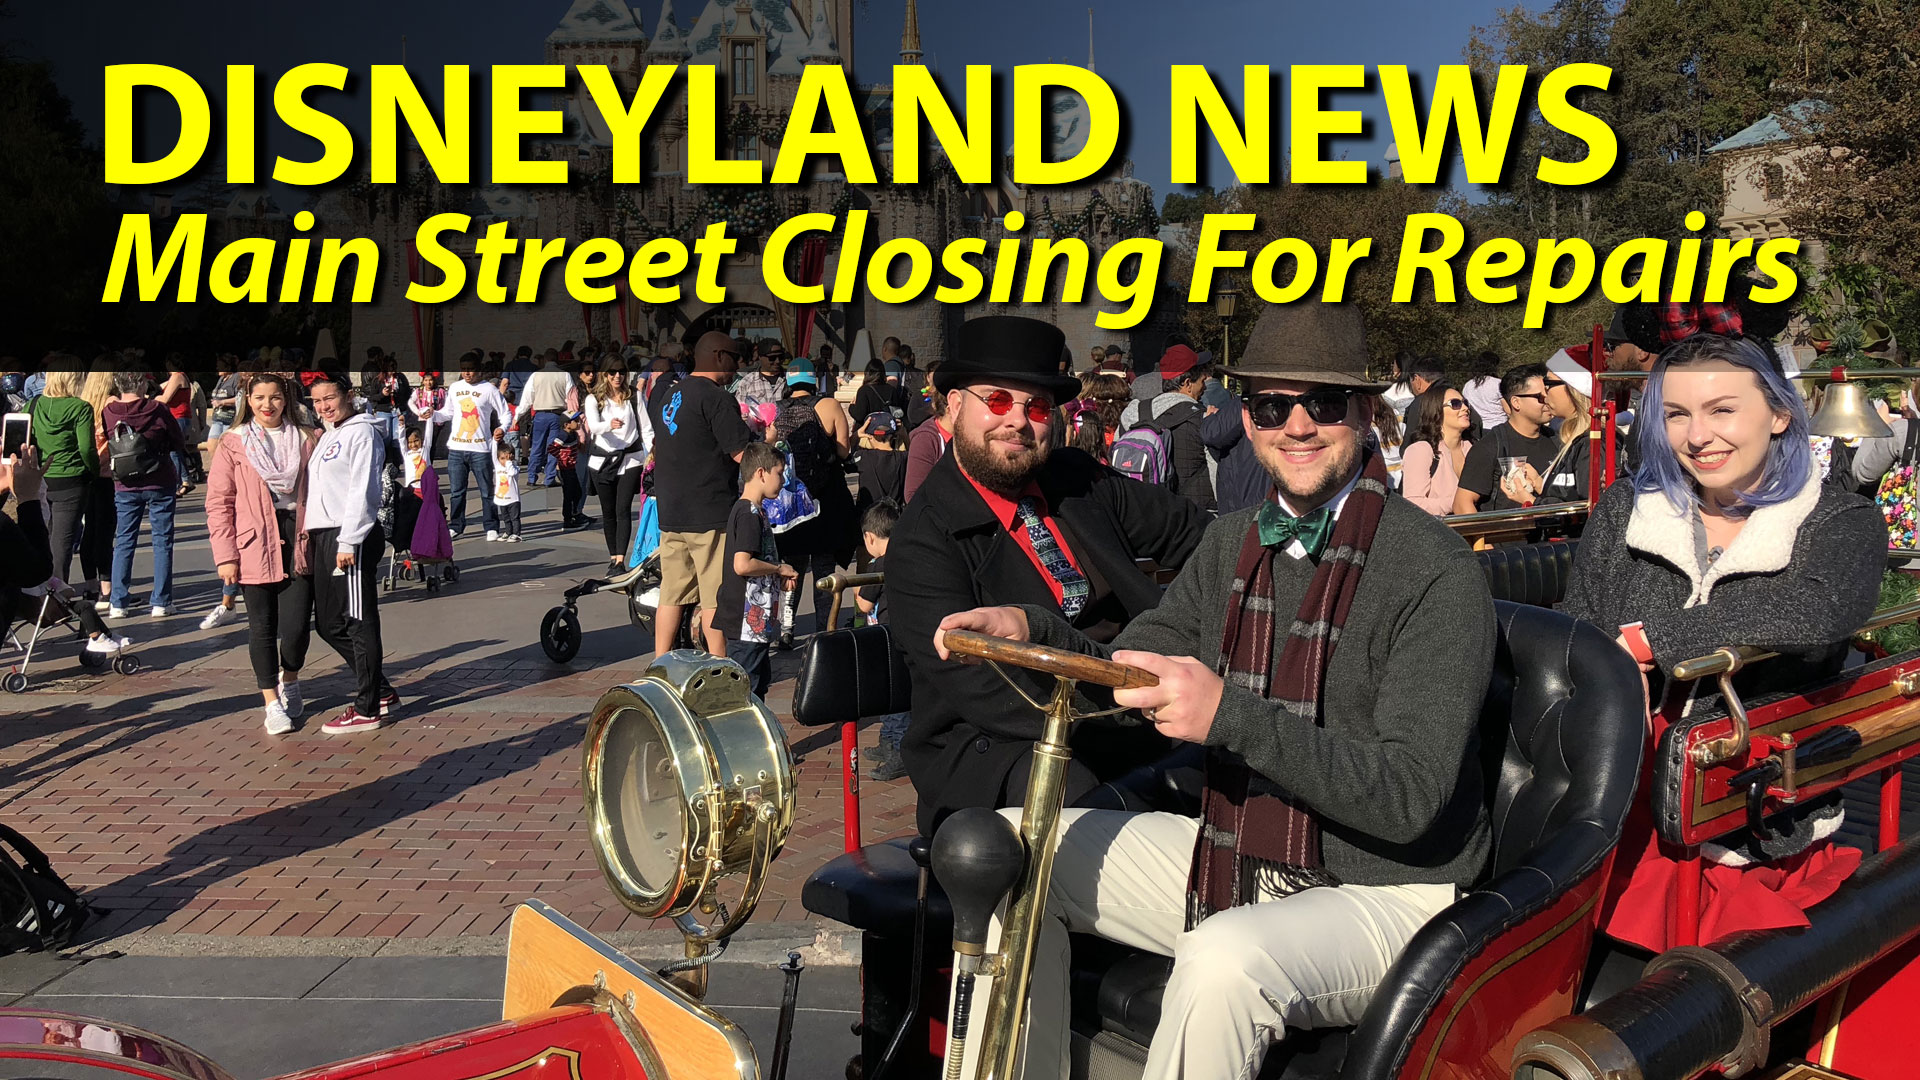 Disneyland News - Main Street Closing for Repairs